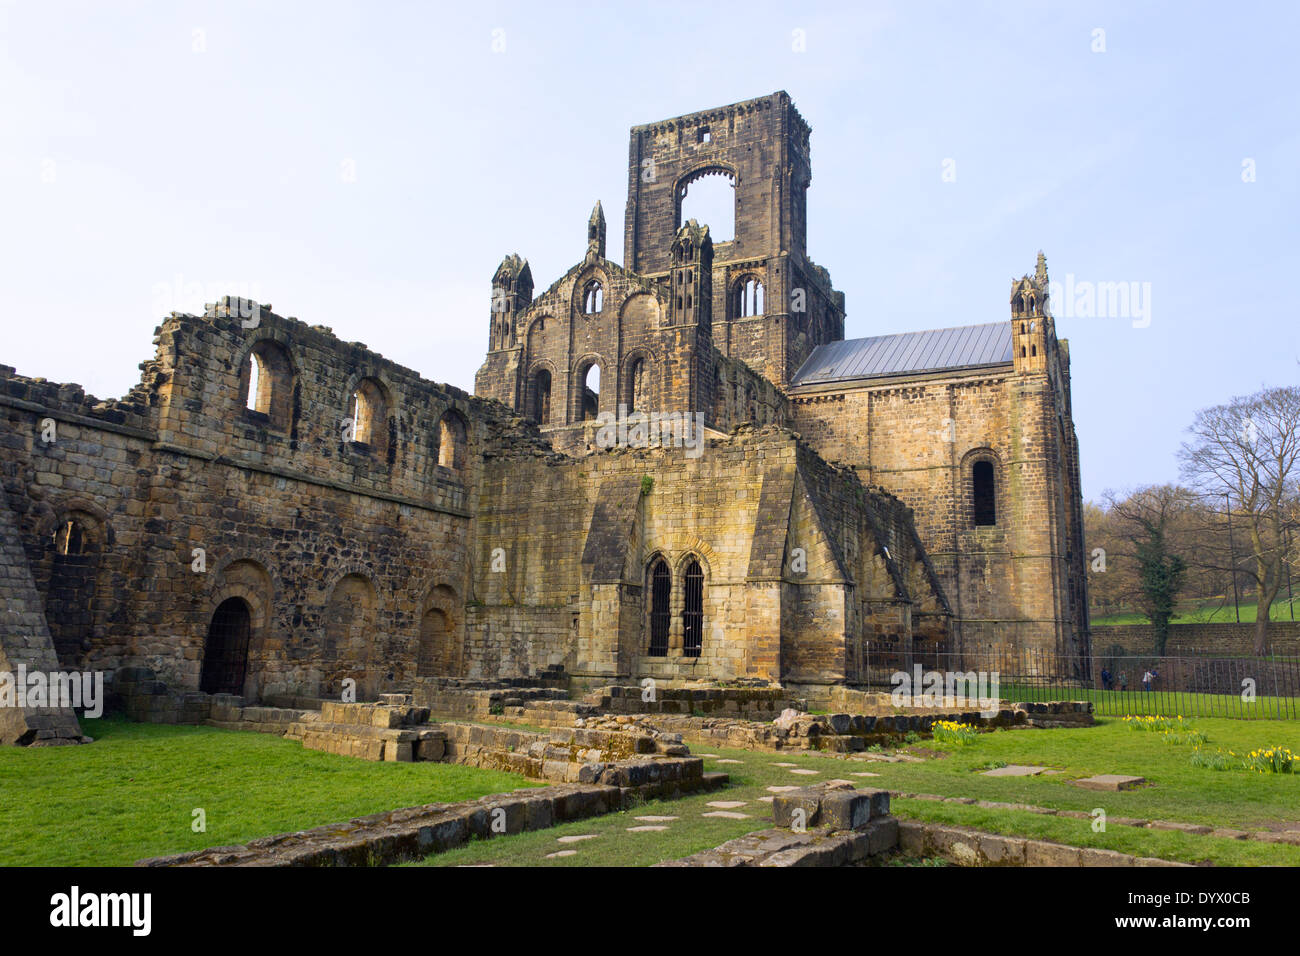 Kirkstall Abbey, kirkstall , Leeds, West Yorkshire, Inglaterra. Un siglo xii monasterio cisterciense en ruinas. Foto de stock